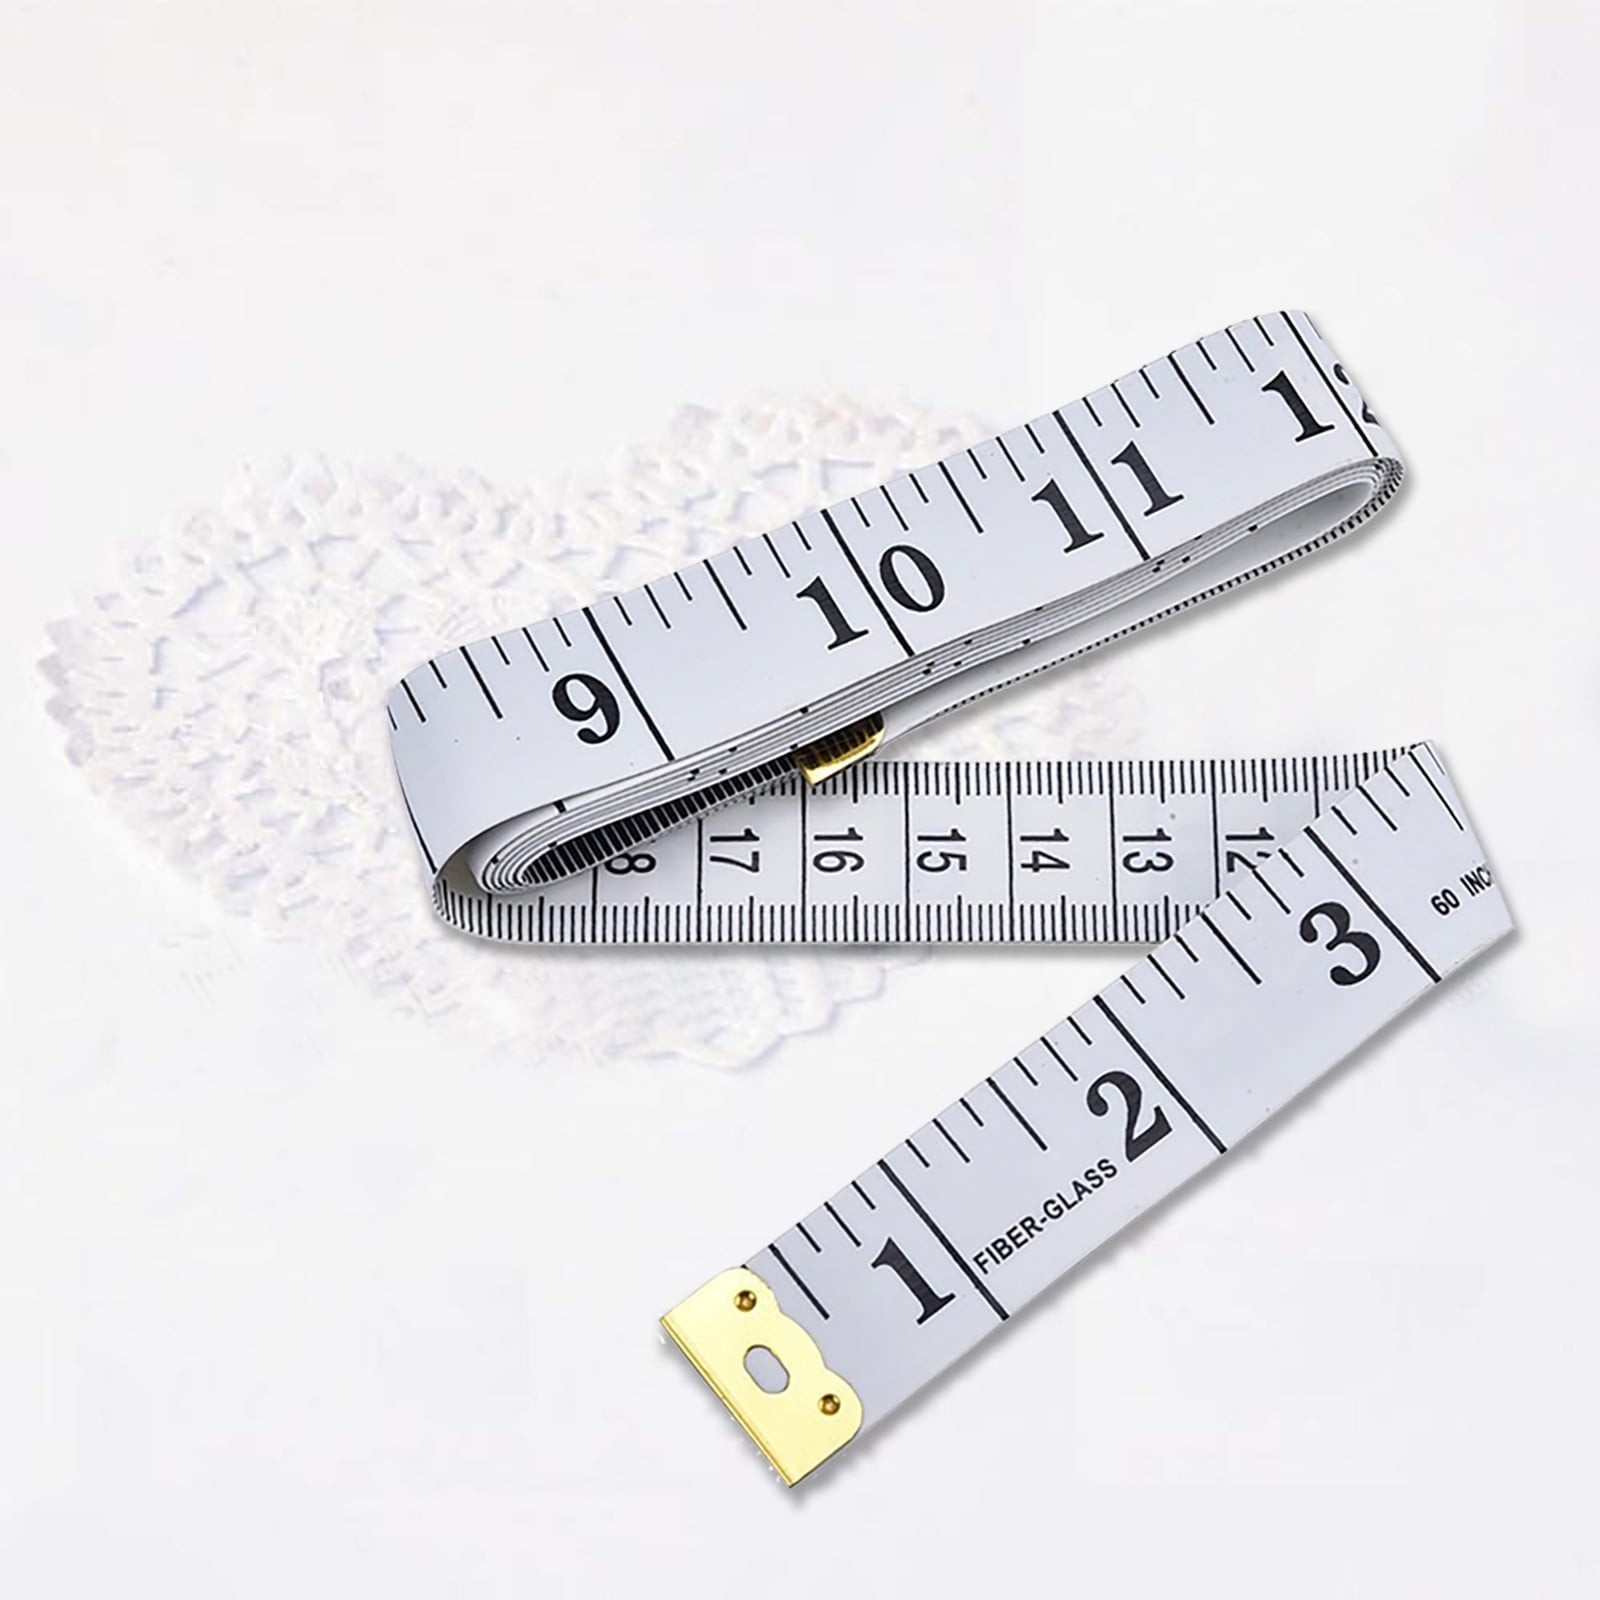 Dukal Fiberglass Tape Measure with White Plastic Case 1/4 x 120. Compact  Retractable Flexible Tape Measuring. Body Cloth Measuring Tape.